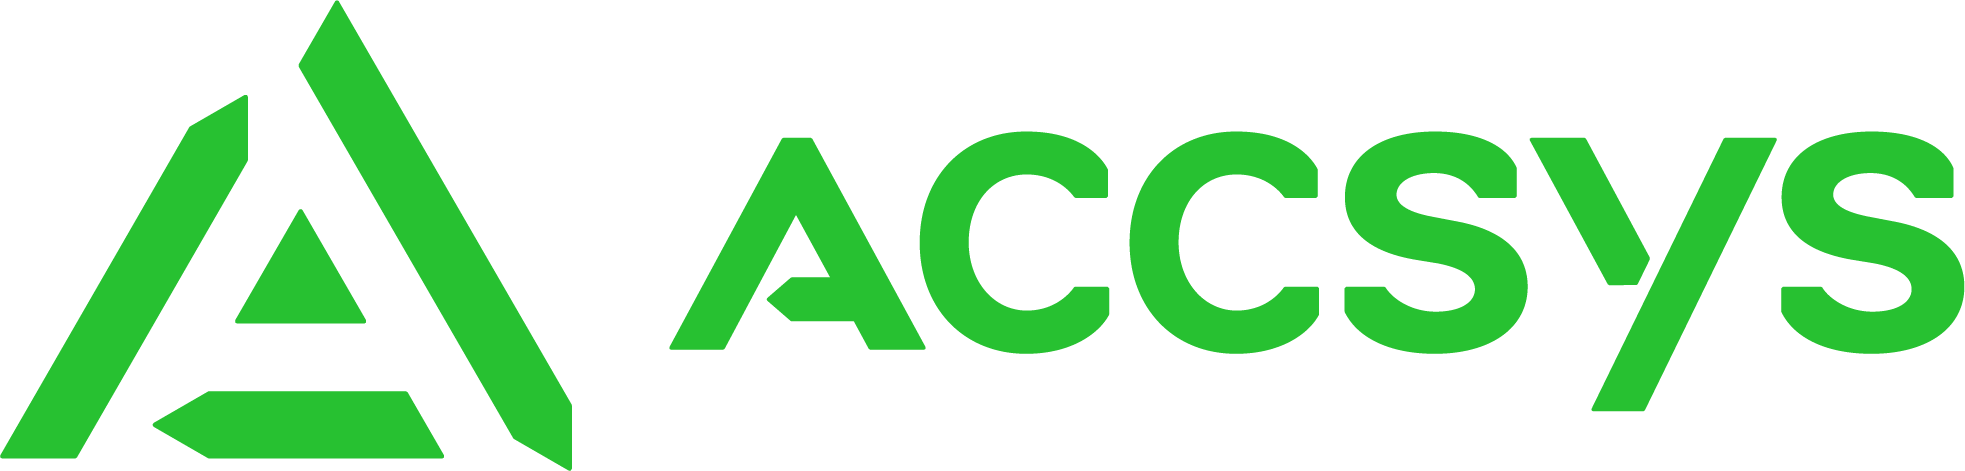 Accsys logo